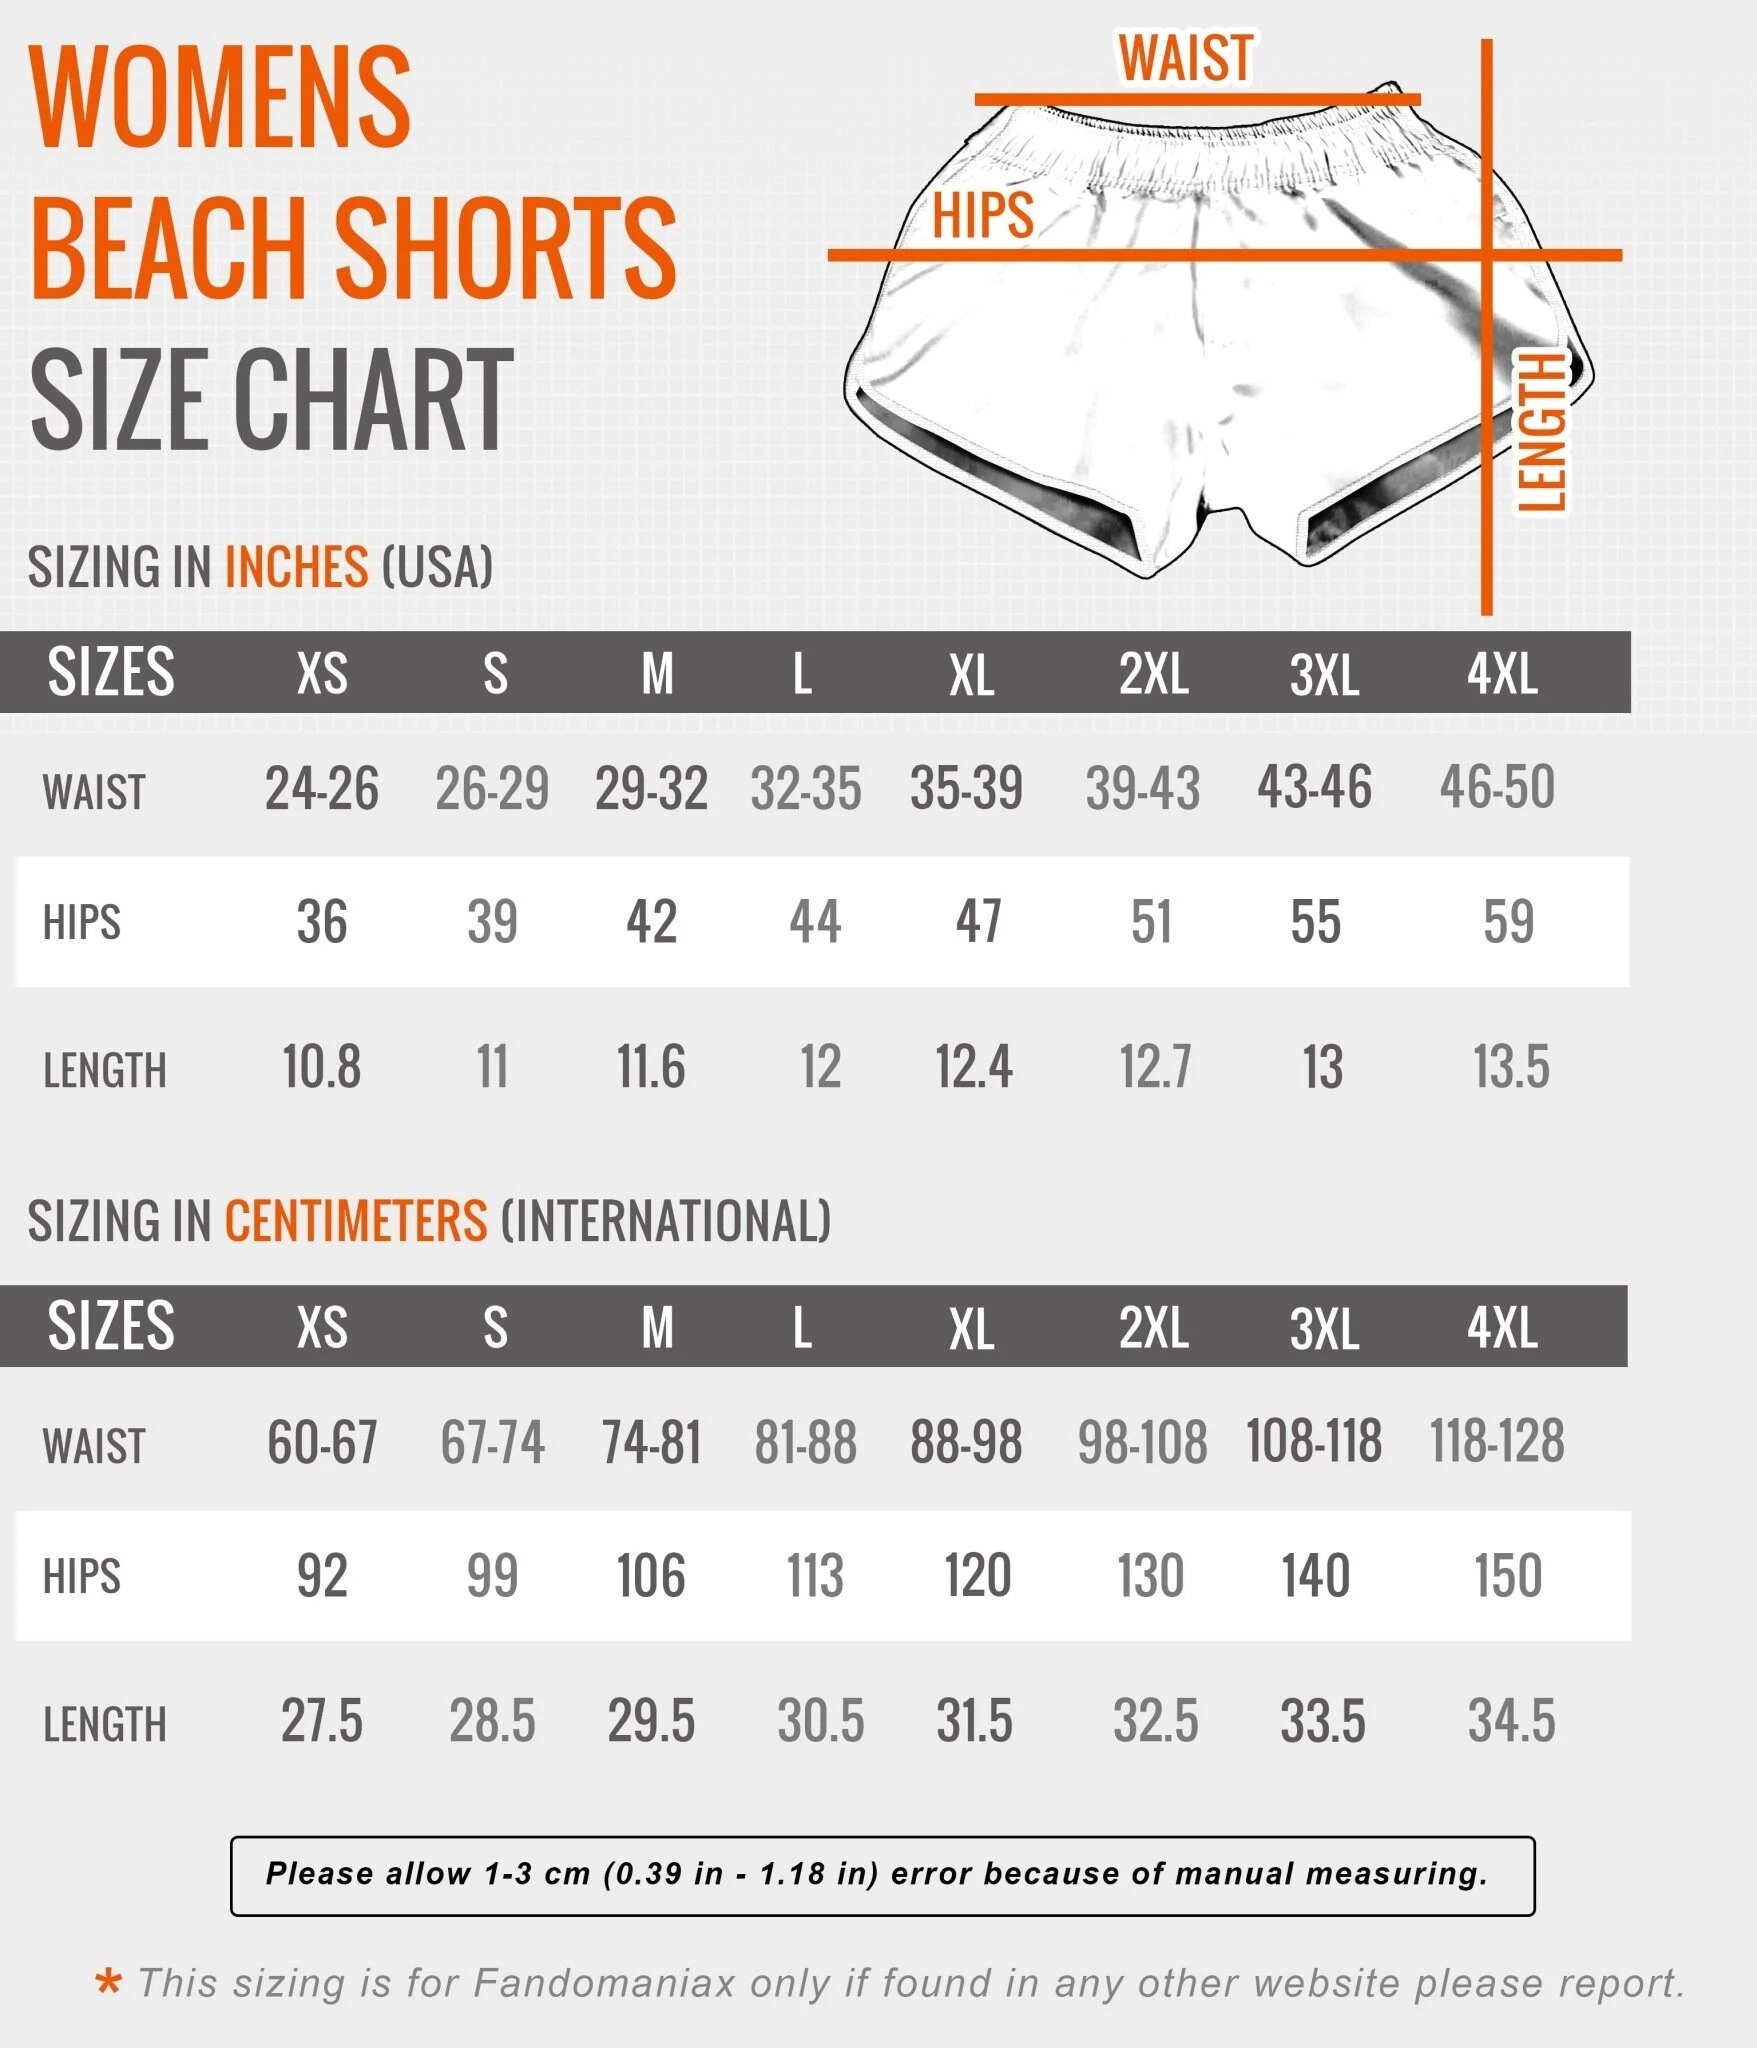 One Punch Man – Saitama Themed Funny Summer/Beach Shorts (Different Sizes) Pants & Shorts